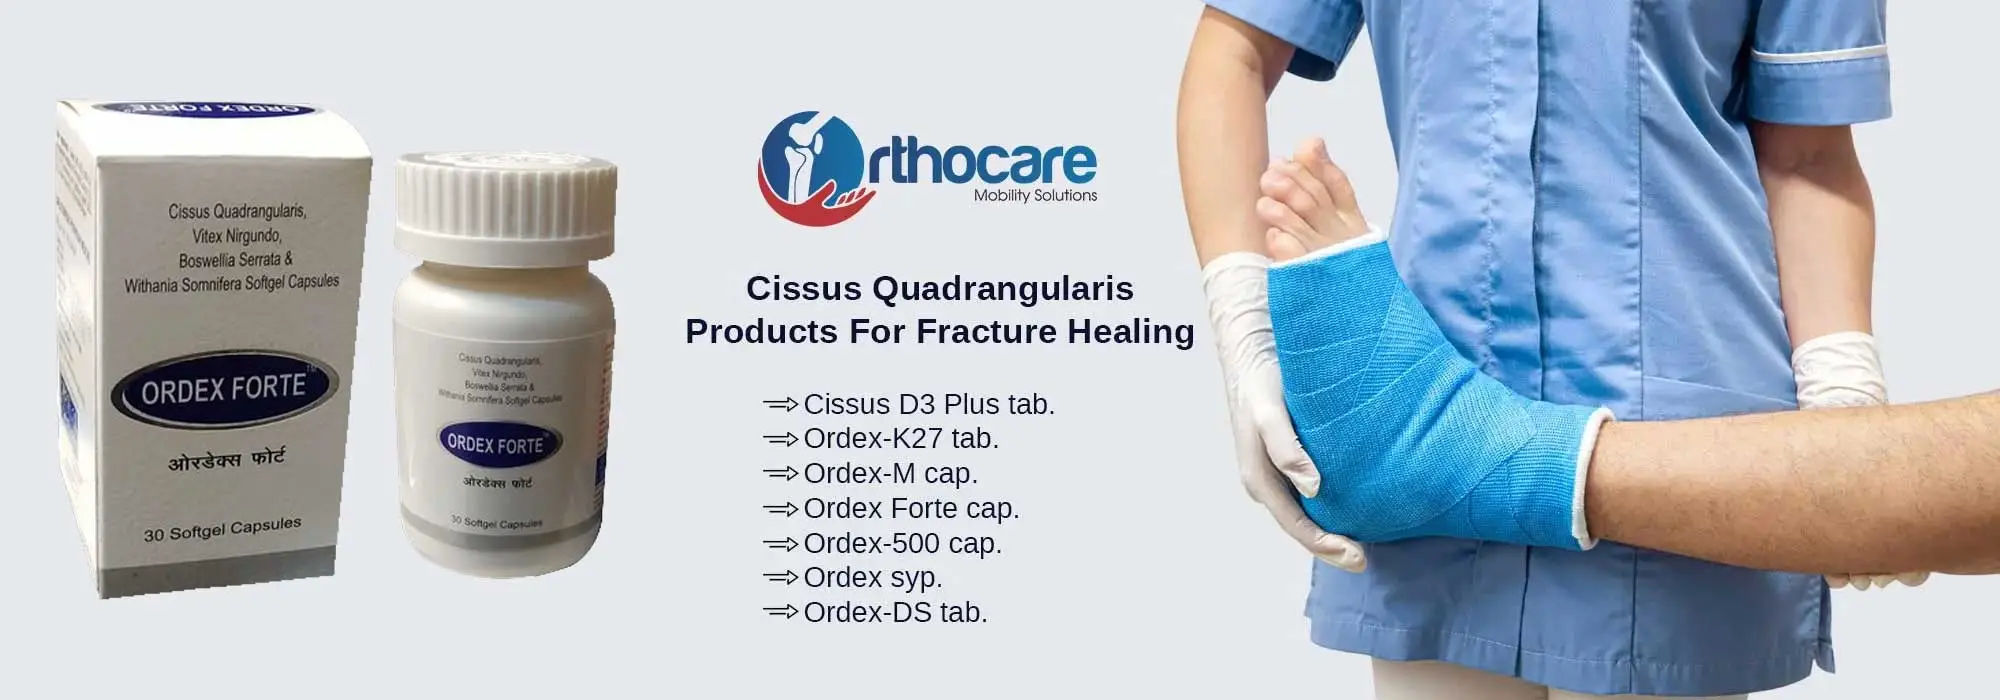 Cissus Quadrangularis Products For Fracture Healing Suppliers in Reasi